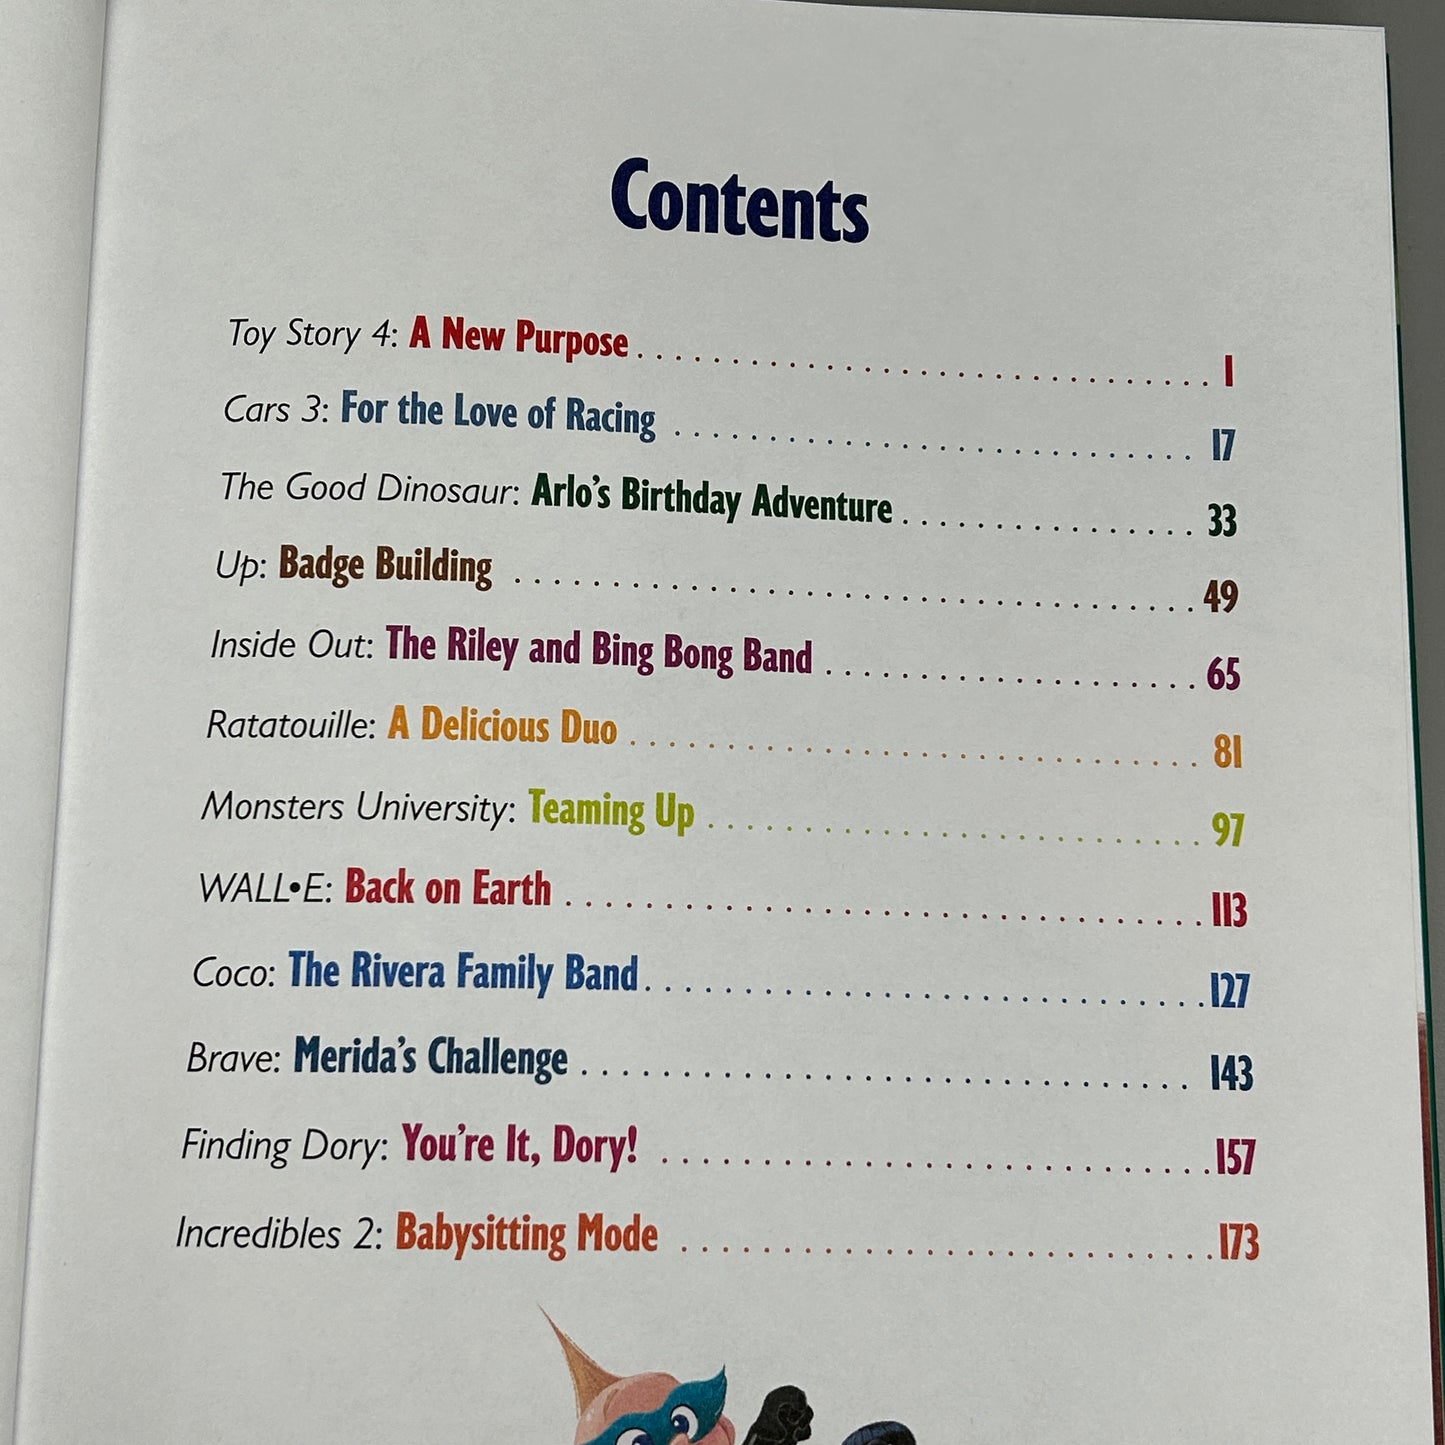 DISNEY 5-Minute Disney Pixar Stories Hardback Book (New)